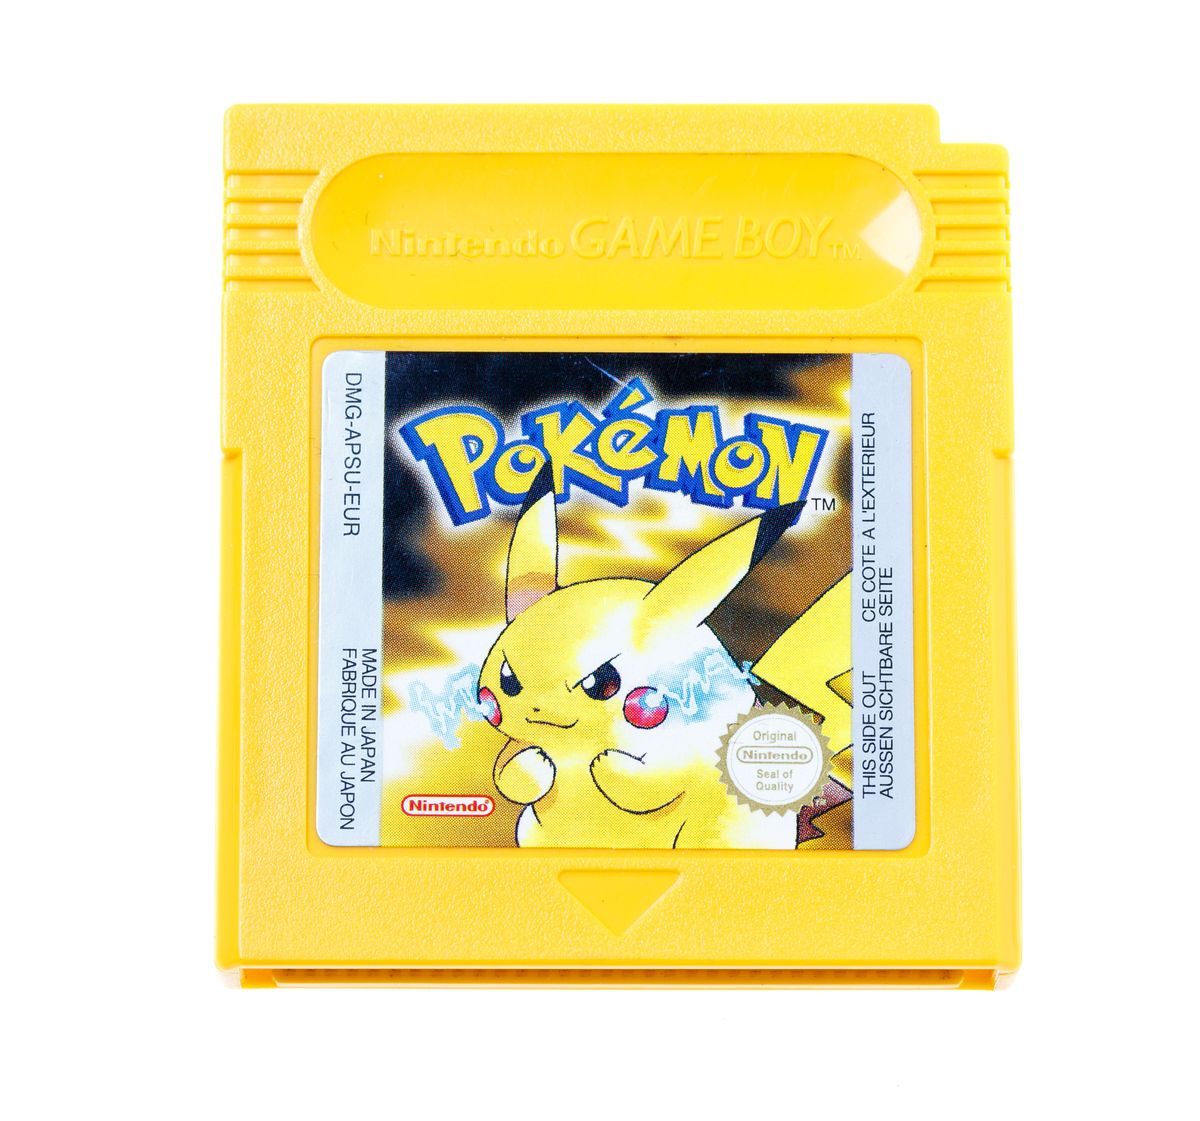 Pokemon Yellow | Gameboy Classic Games | RetroNintendoKopen.nl